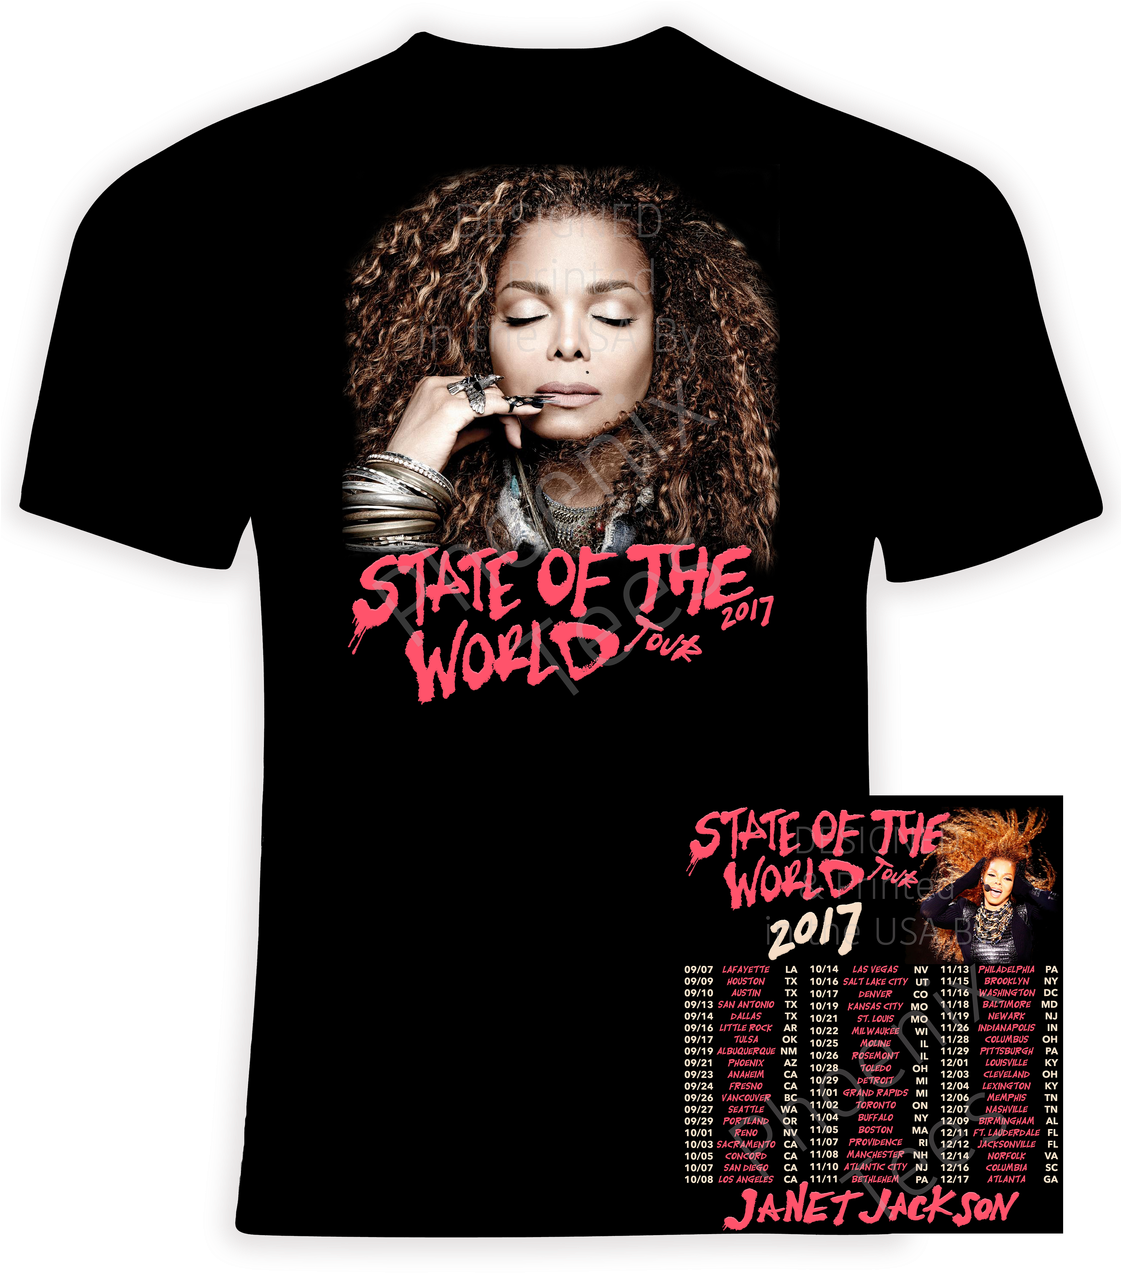 Janet Jackson Stateofthe World Tour T Shirt2017 PNG